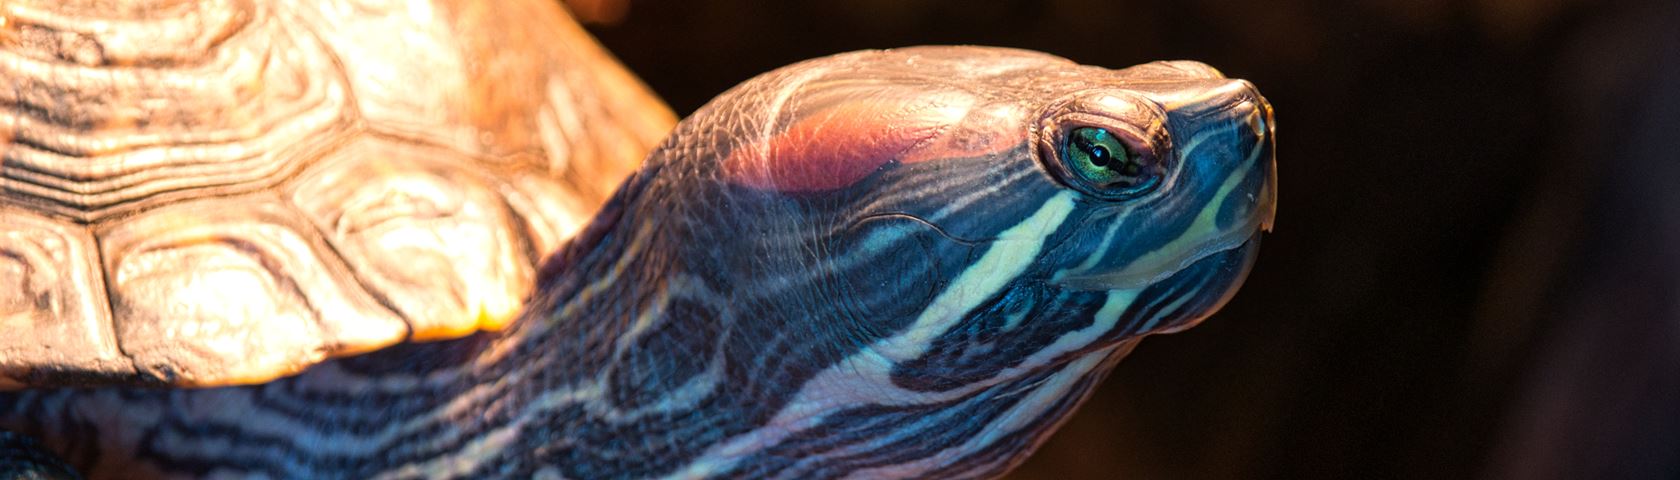 Turtle Closeup